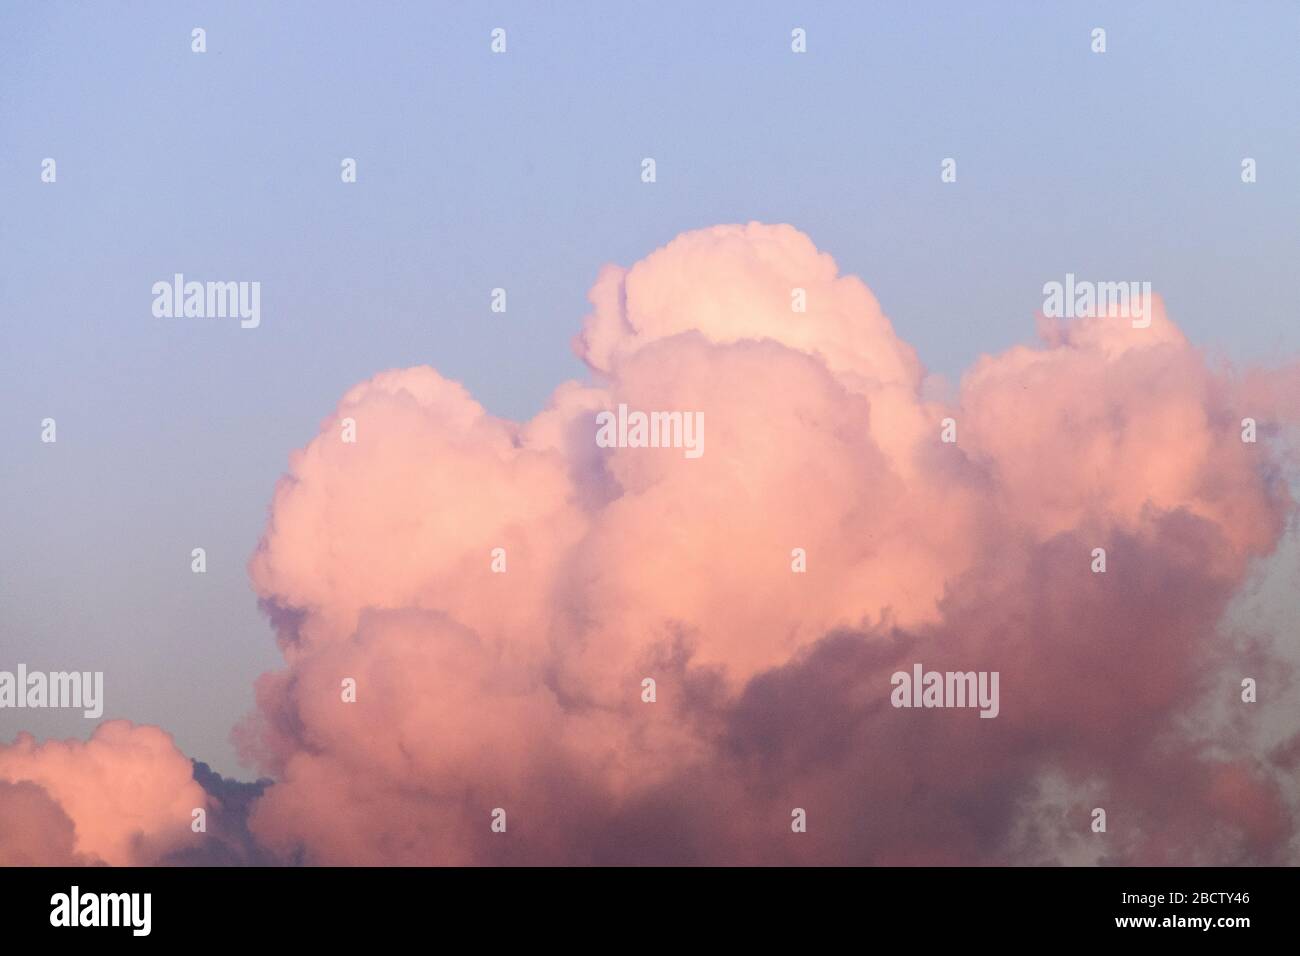 Cotton candy cloud - Impossible Images - Unique stock images for